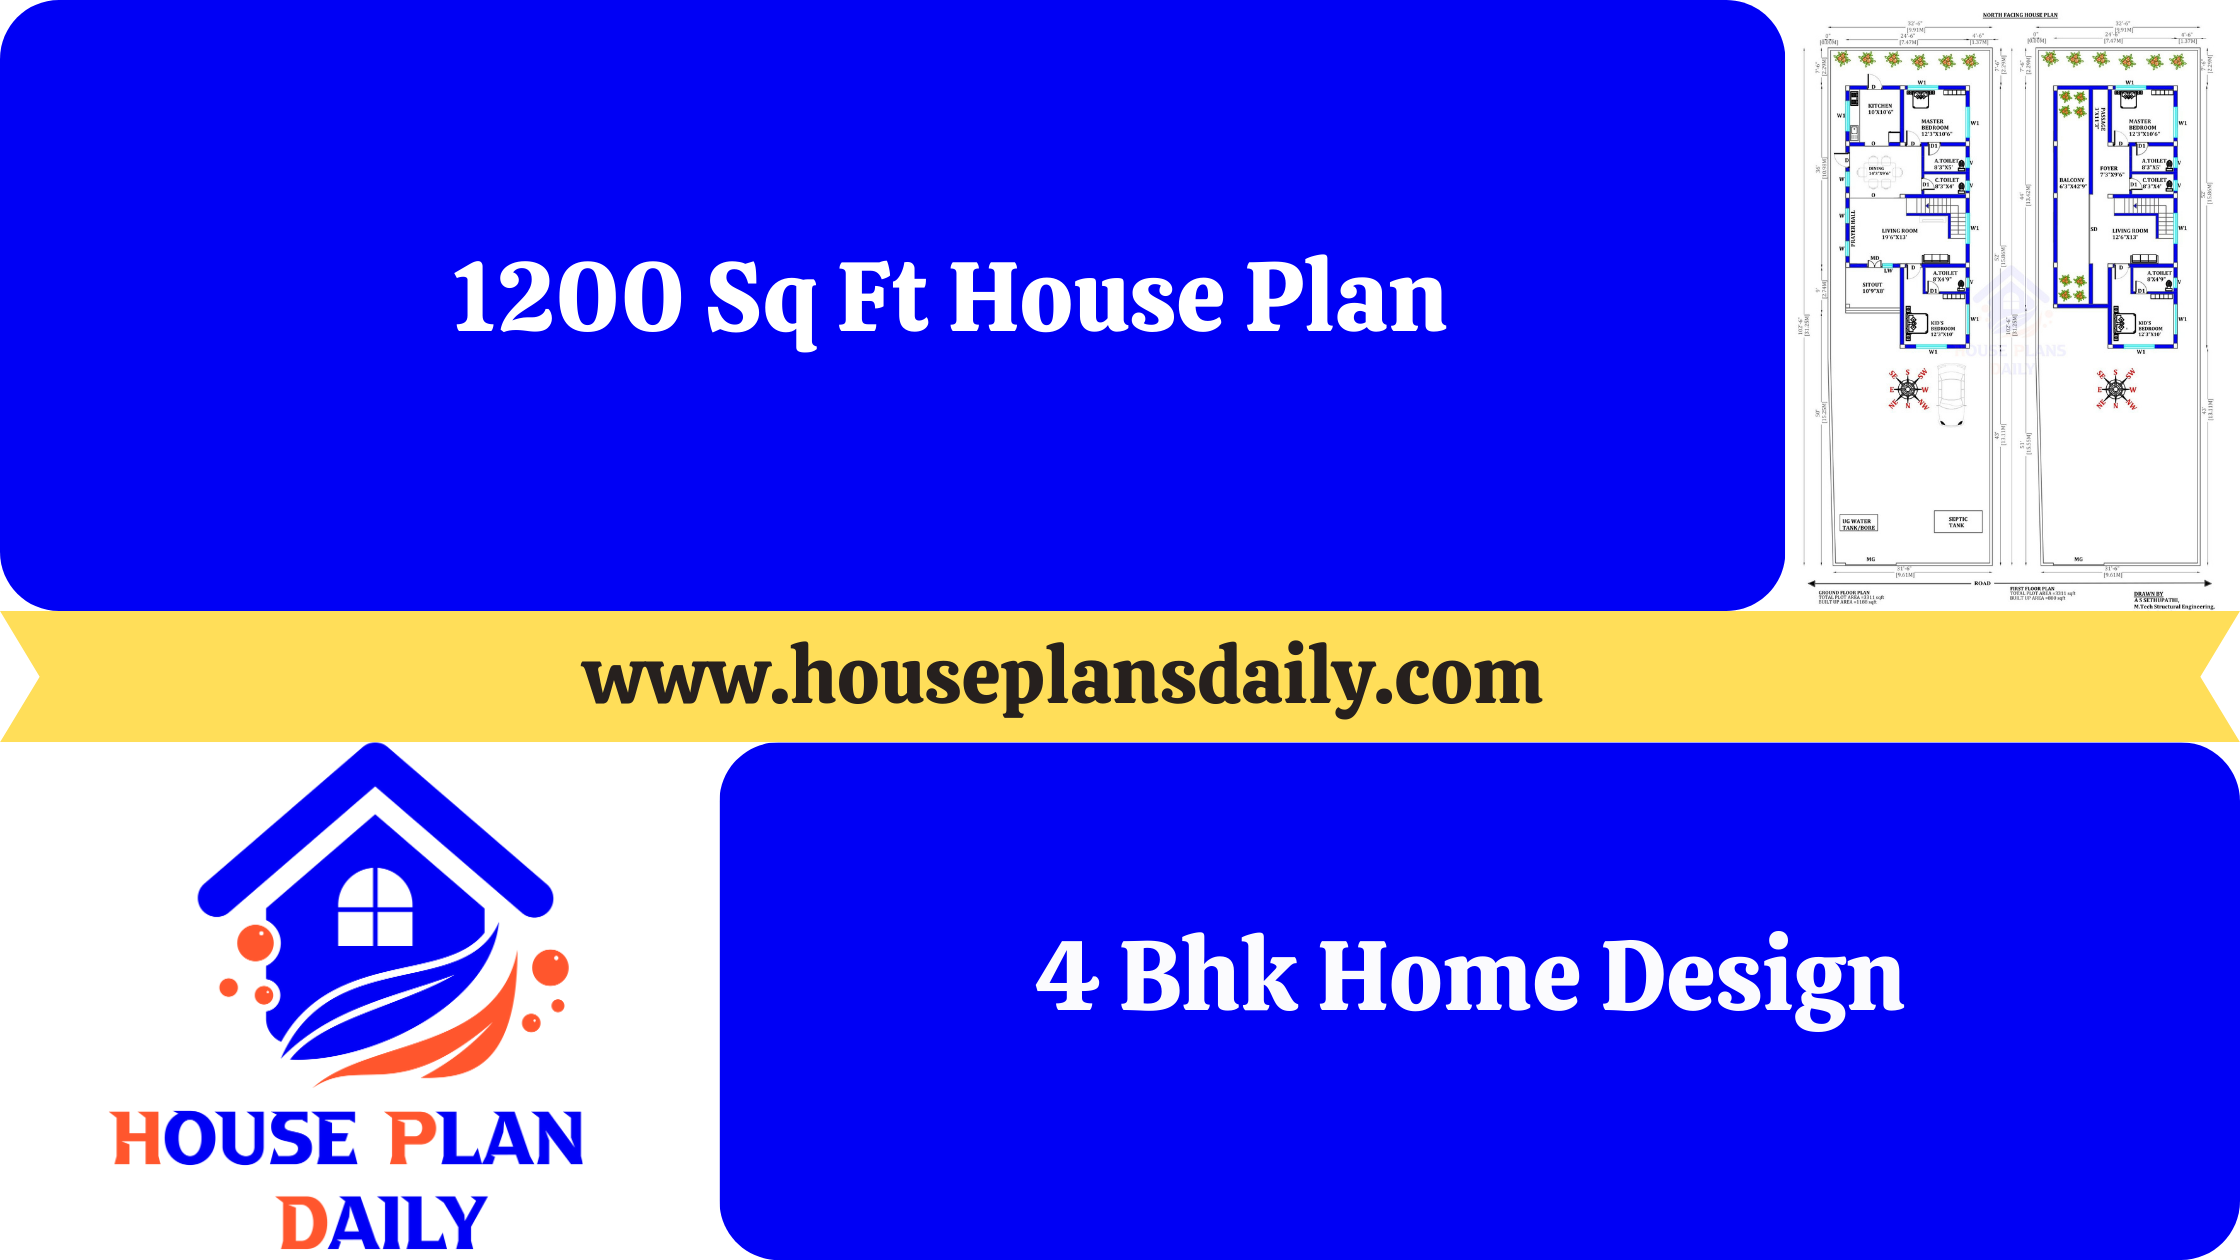 1200 Sq Ft House Plan | 4 Bhk Home Design